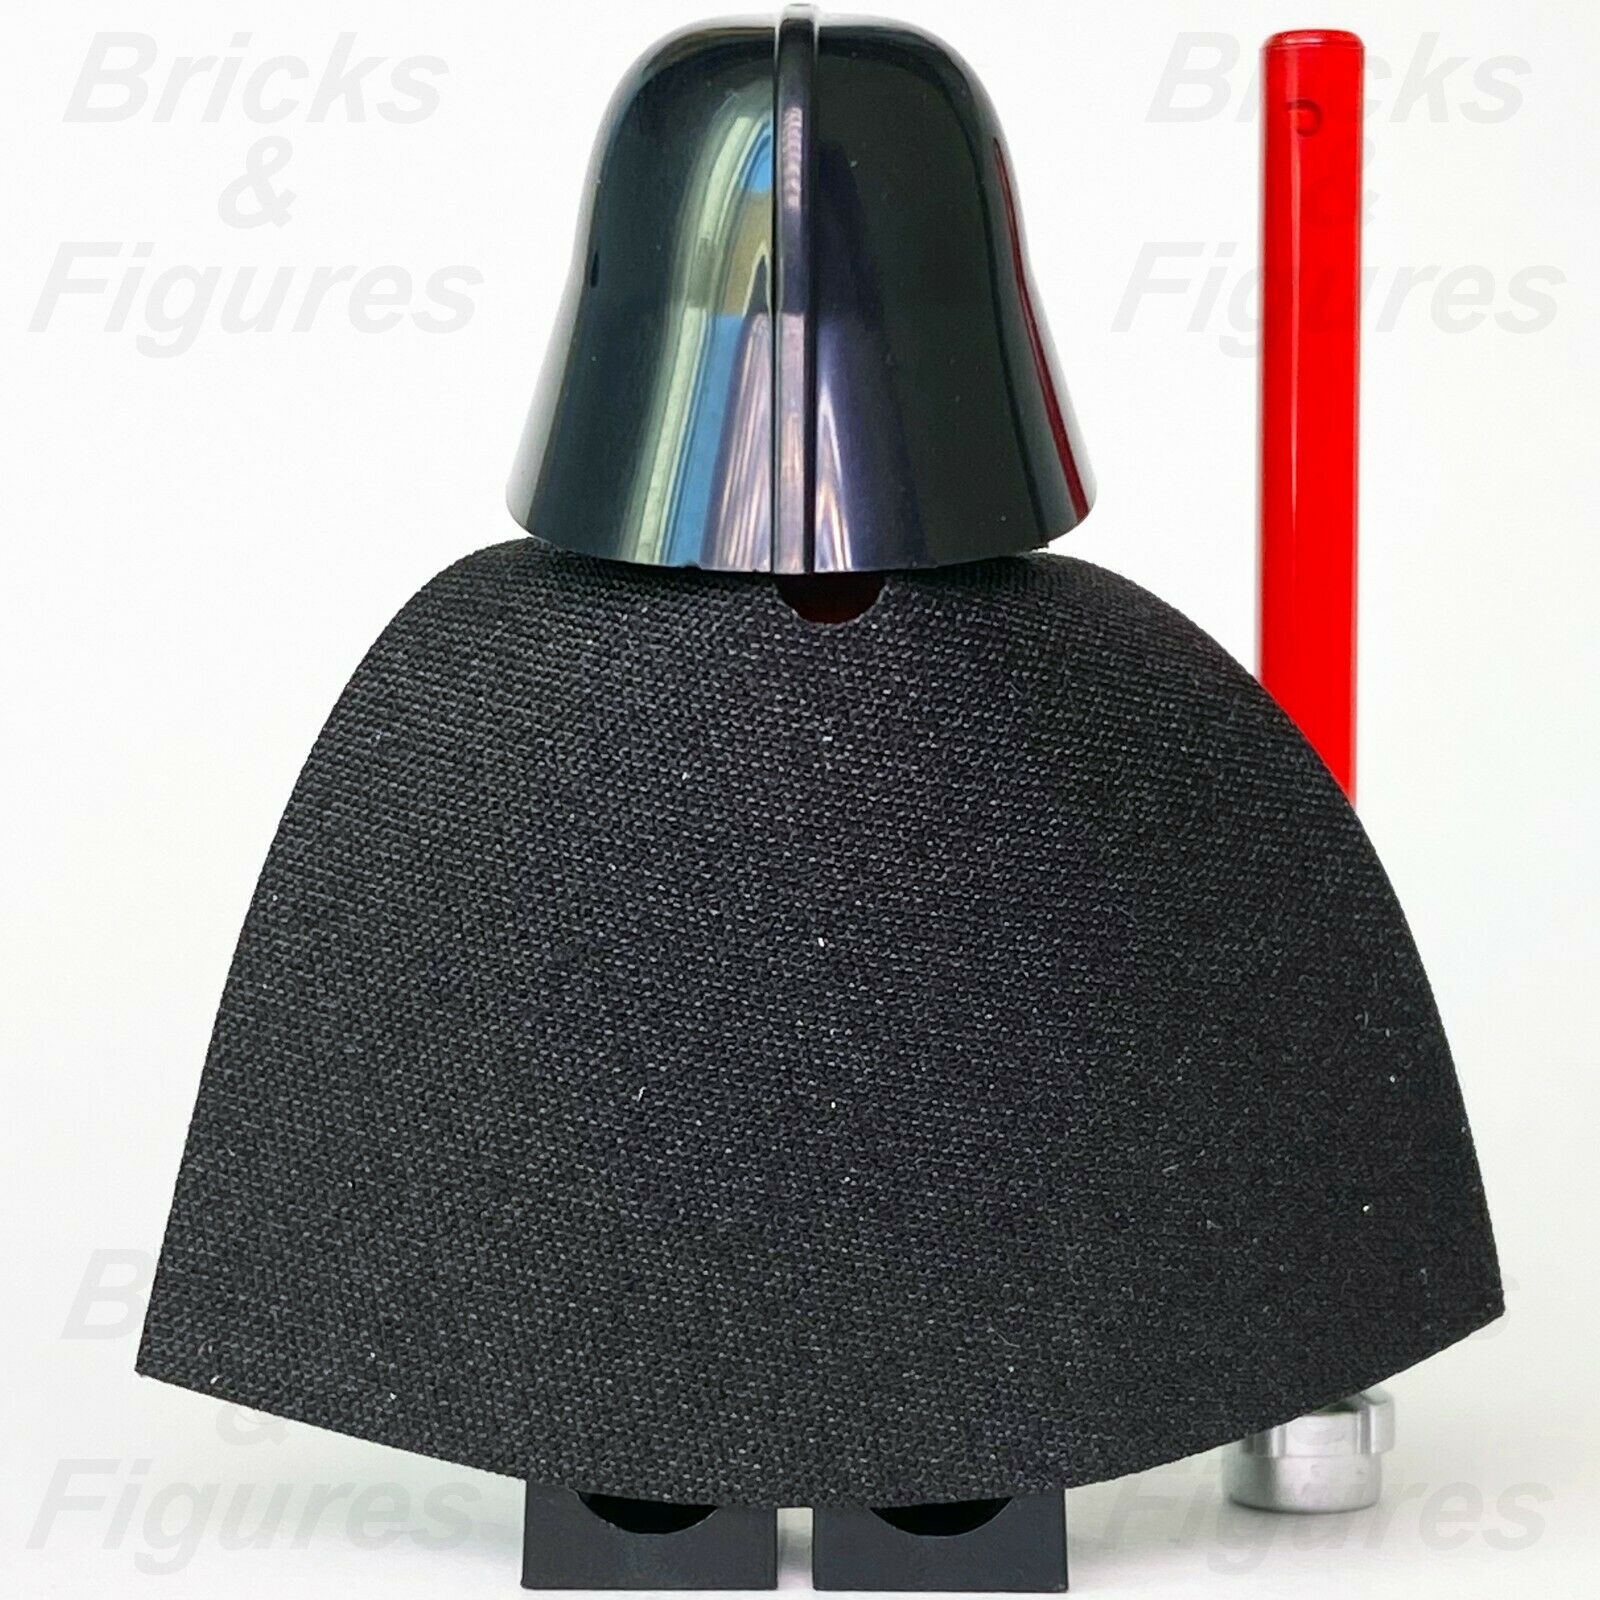 Star Wars LEGO Darth Vader with Christmas Sweater Death Star Minifigure 75279 - Bricks & Figures